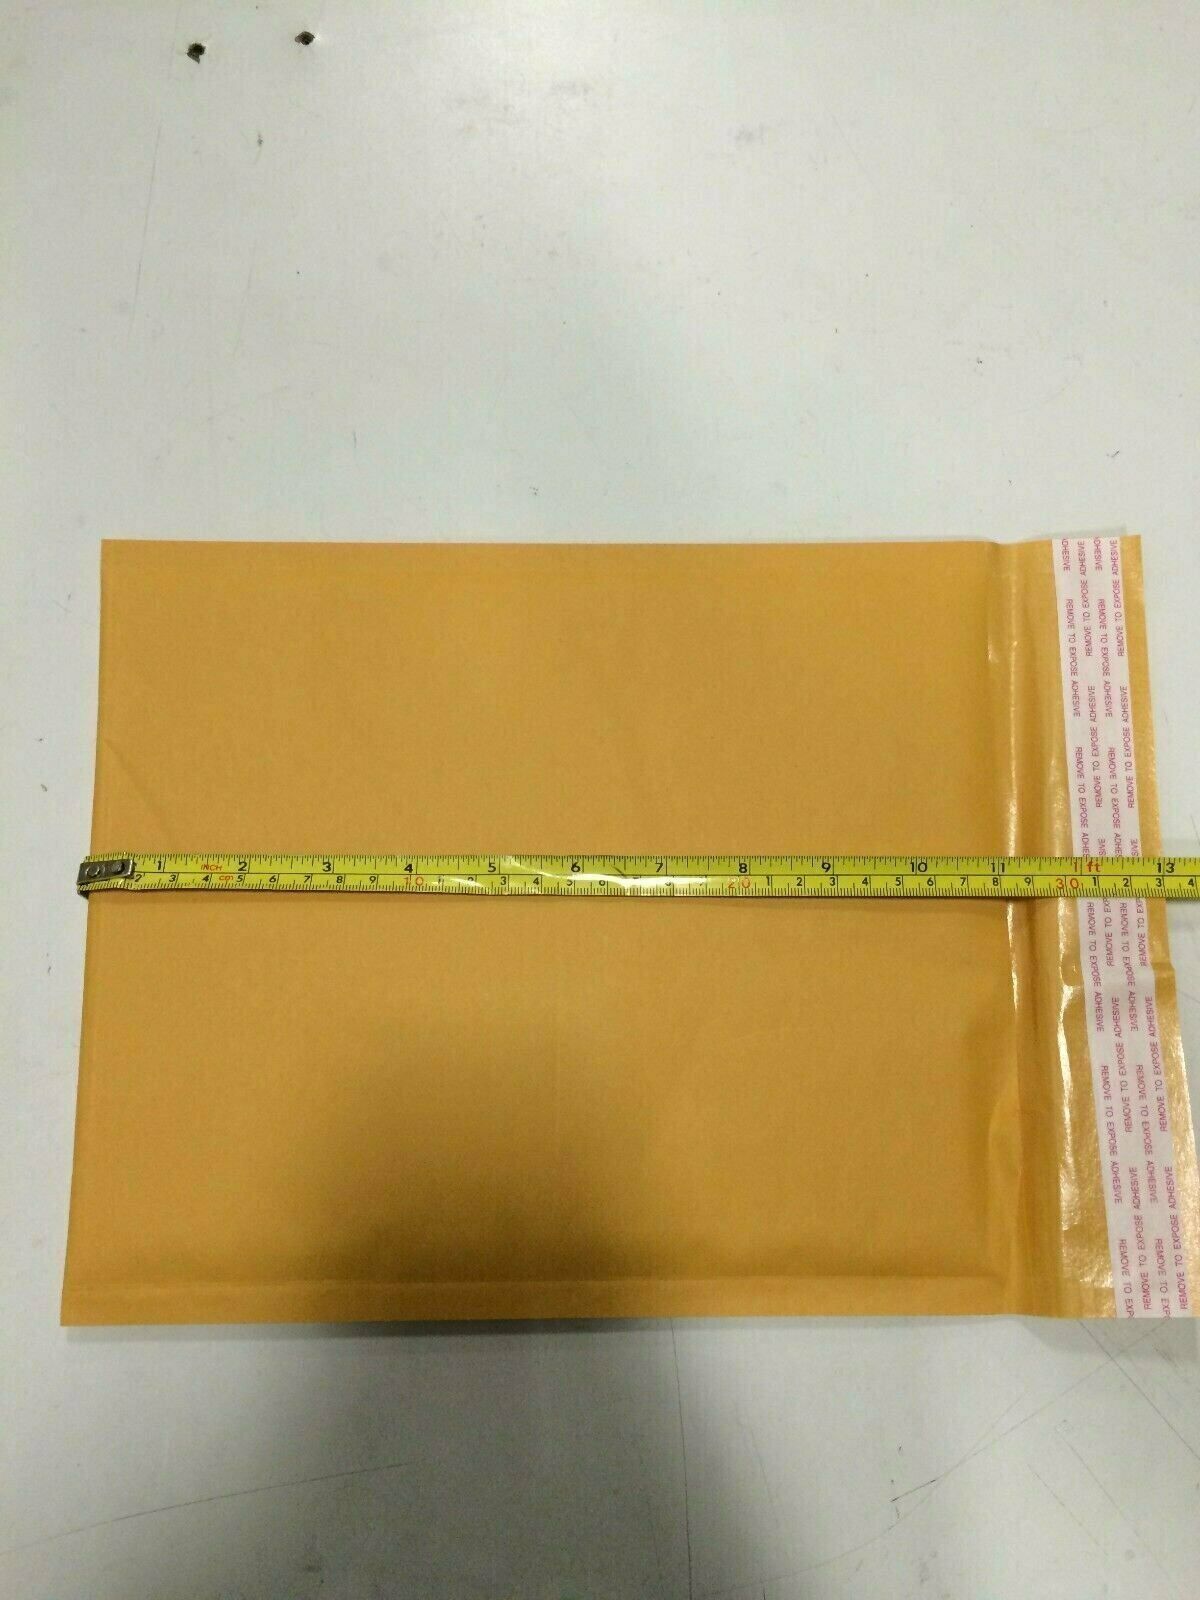 200 #2 8.5x12 Kraft Bubble Padded Envelopes Mailers Shipping Case 8.5"x12"